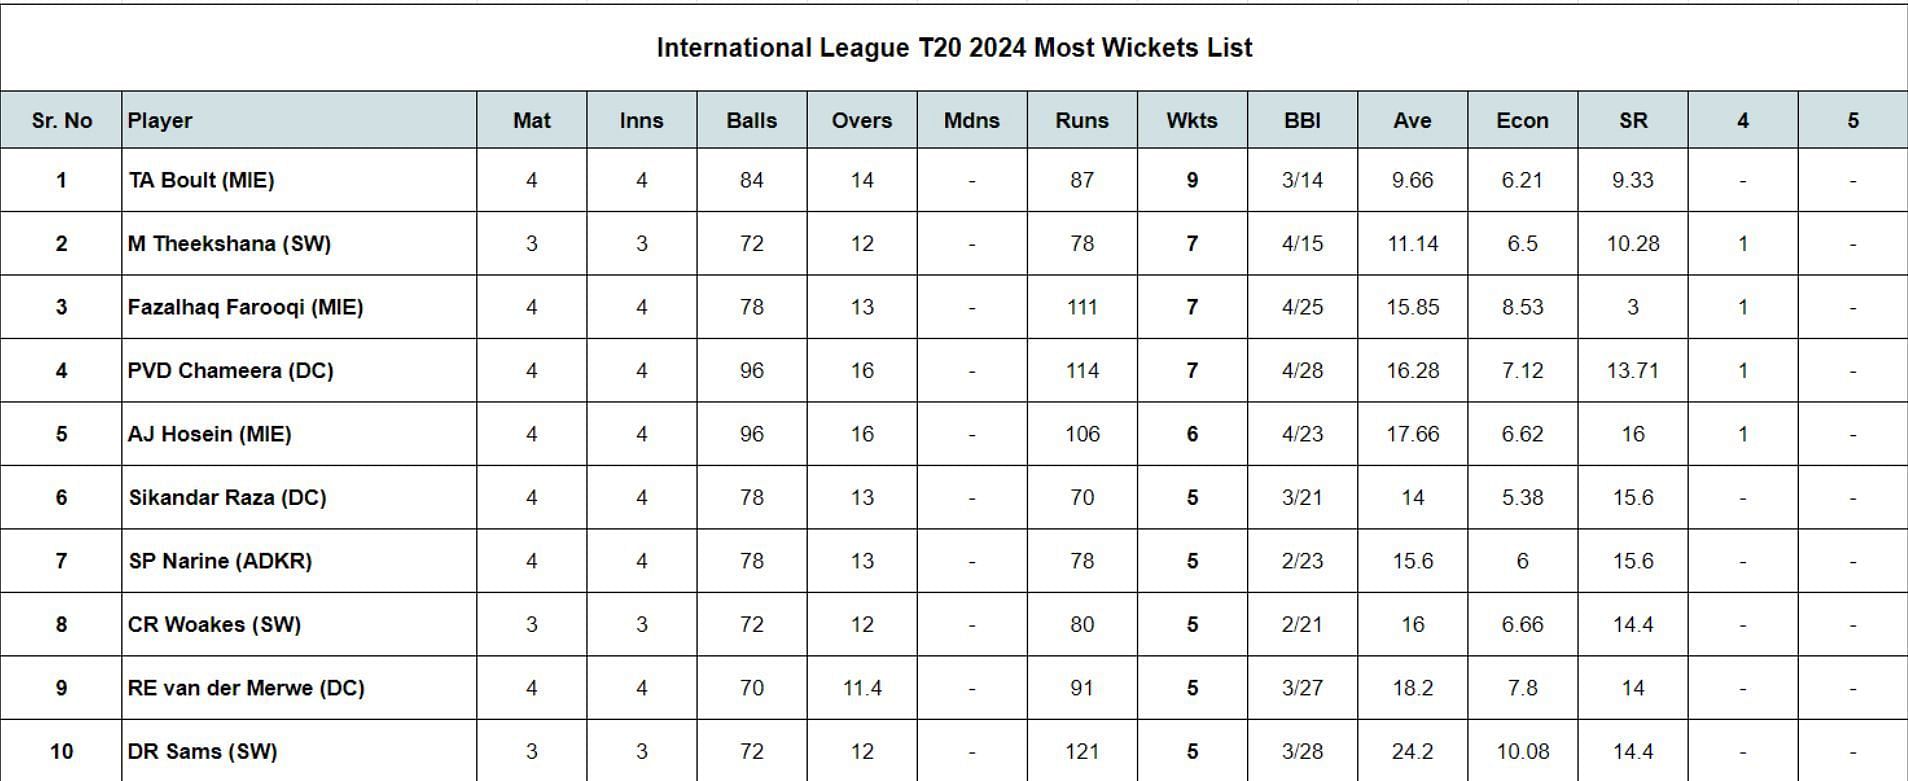 International League T20 2024 Most Wickets List